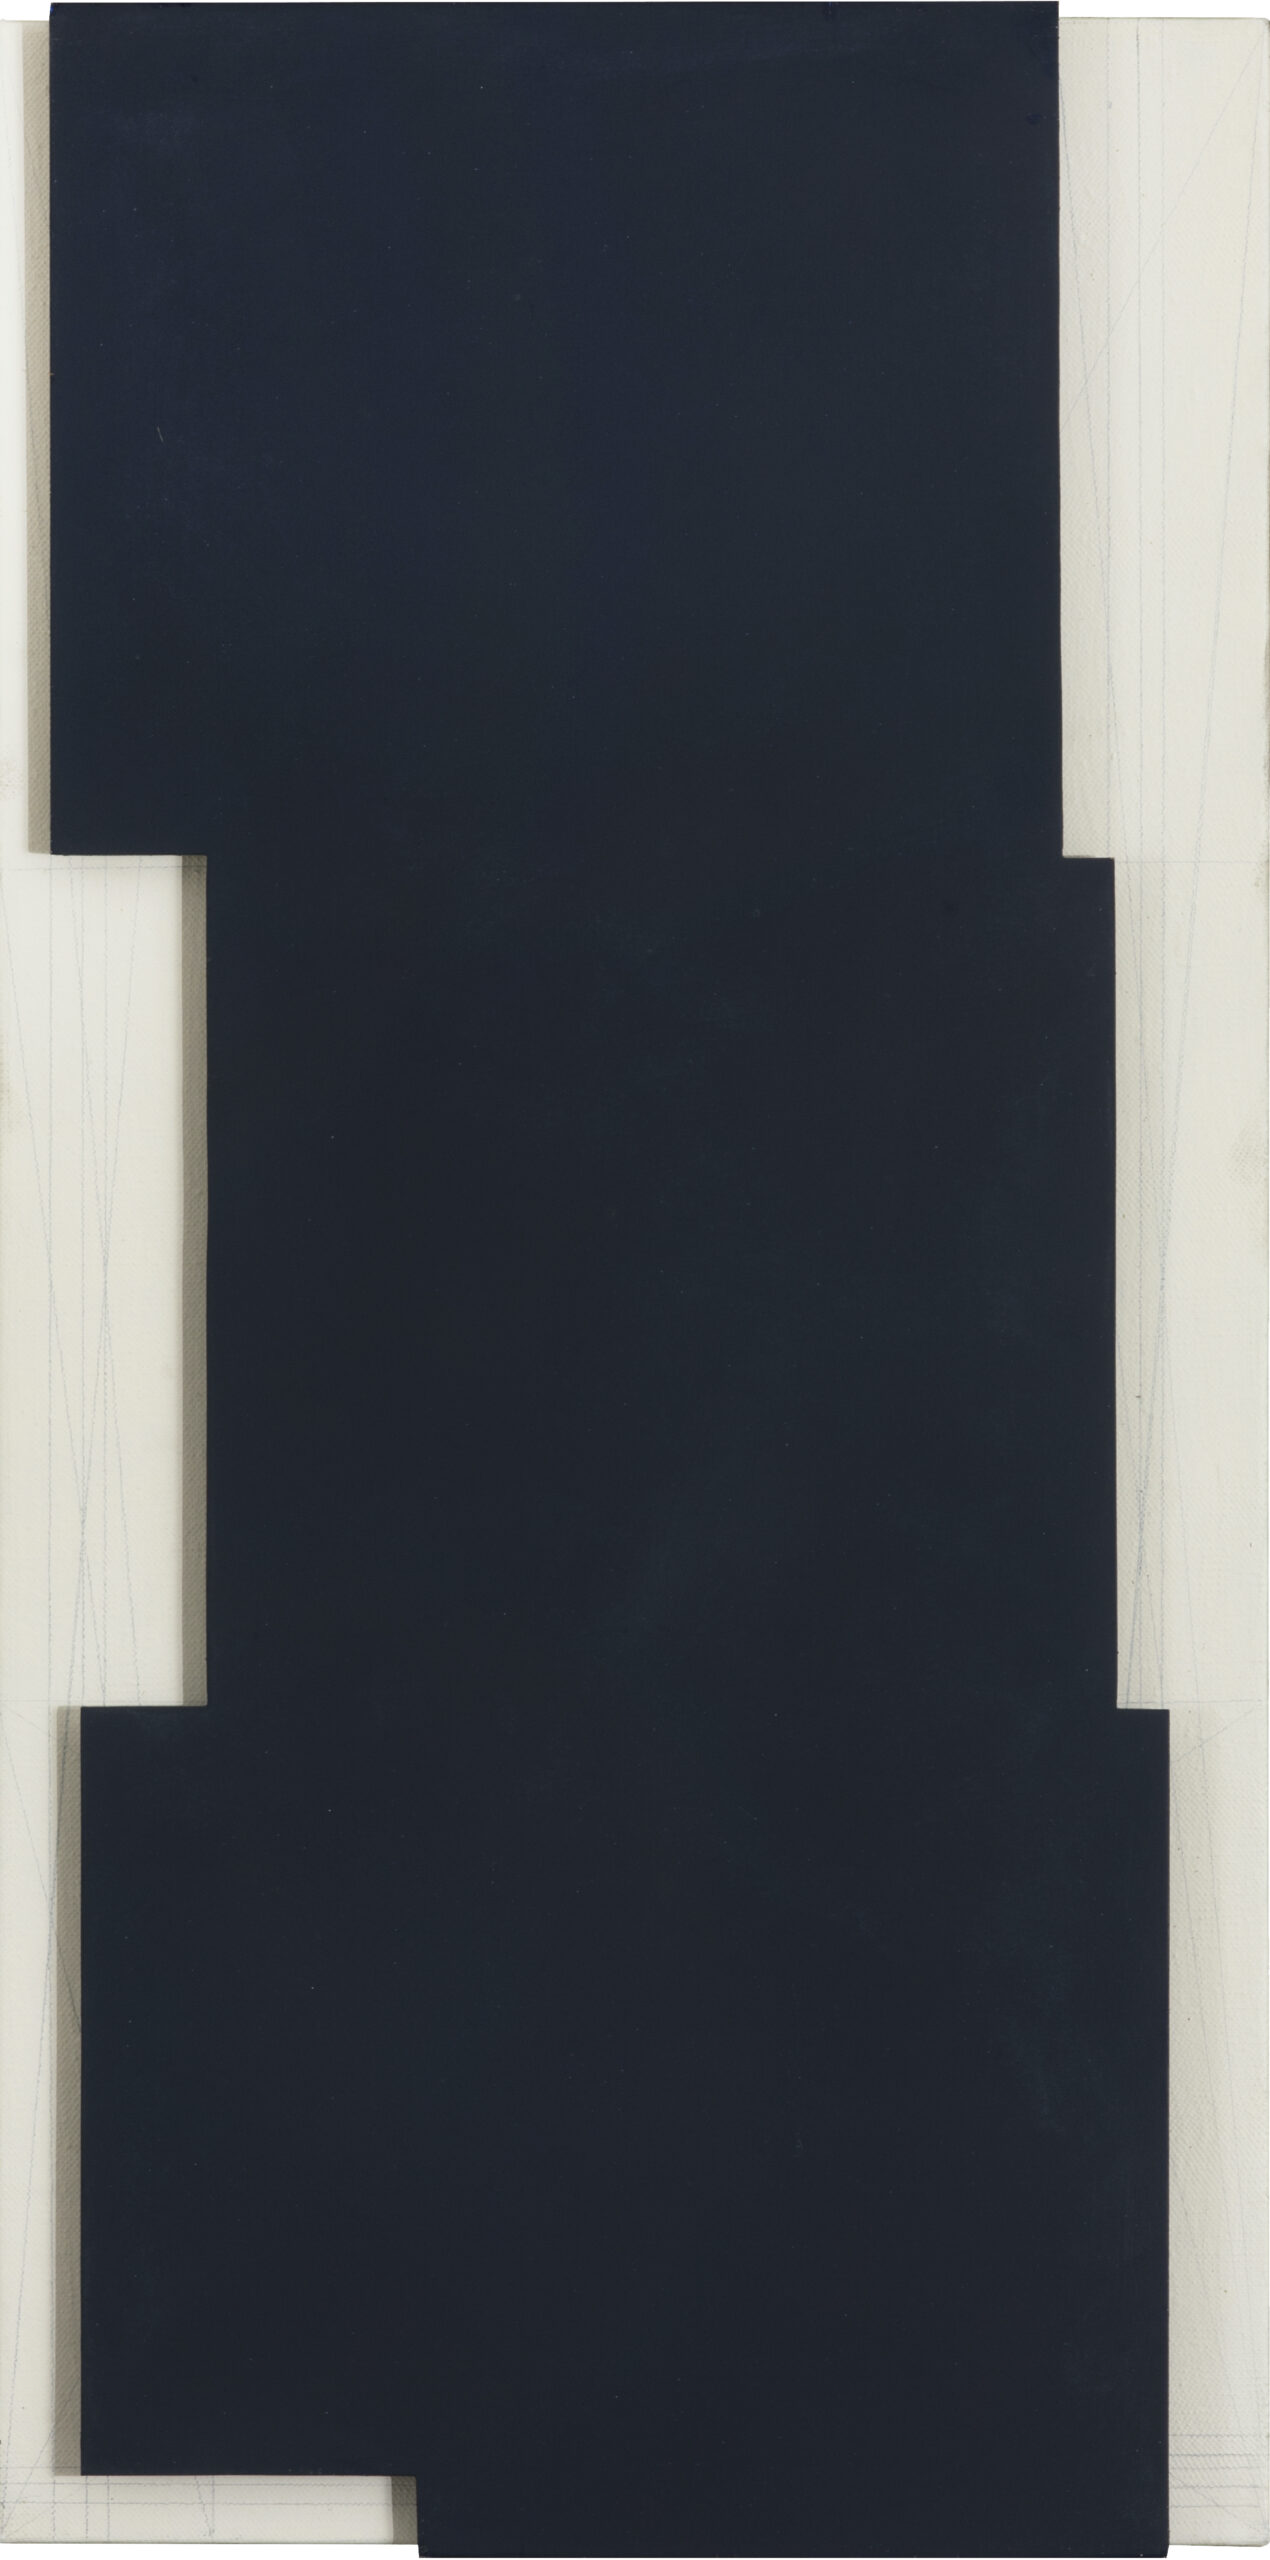 Diagonale, 1979, Acrylic and painted aluminium on canvas, 80 x 40 cm